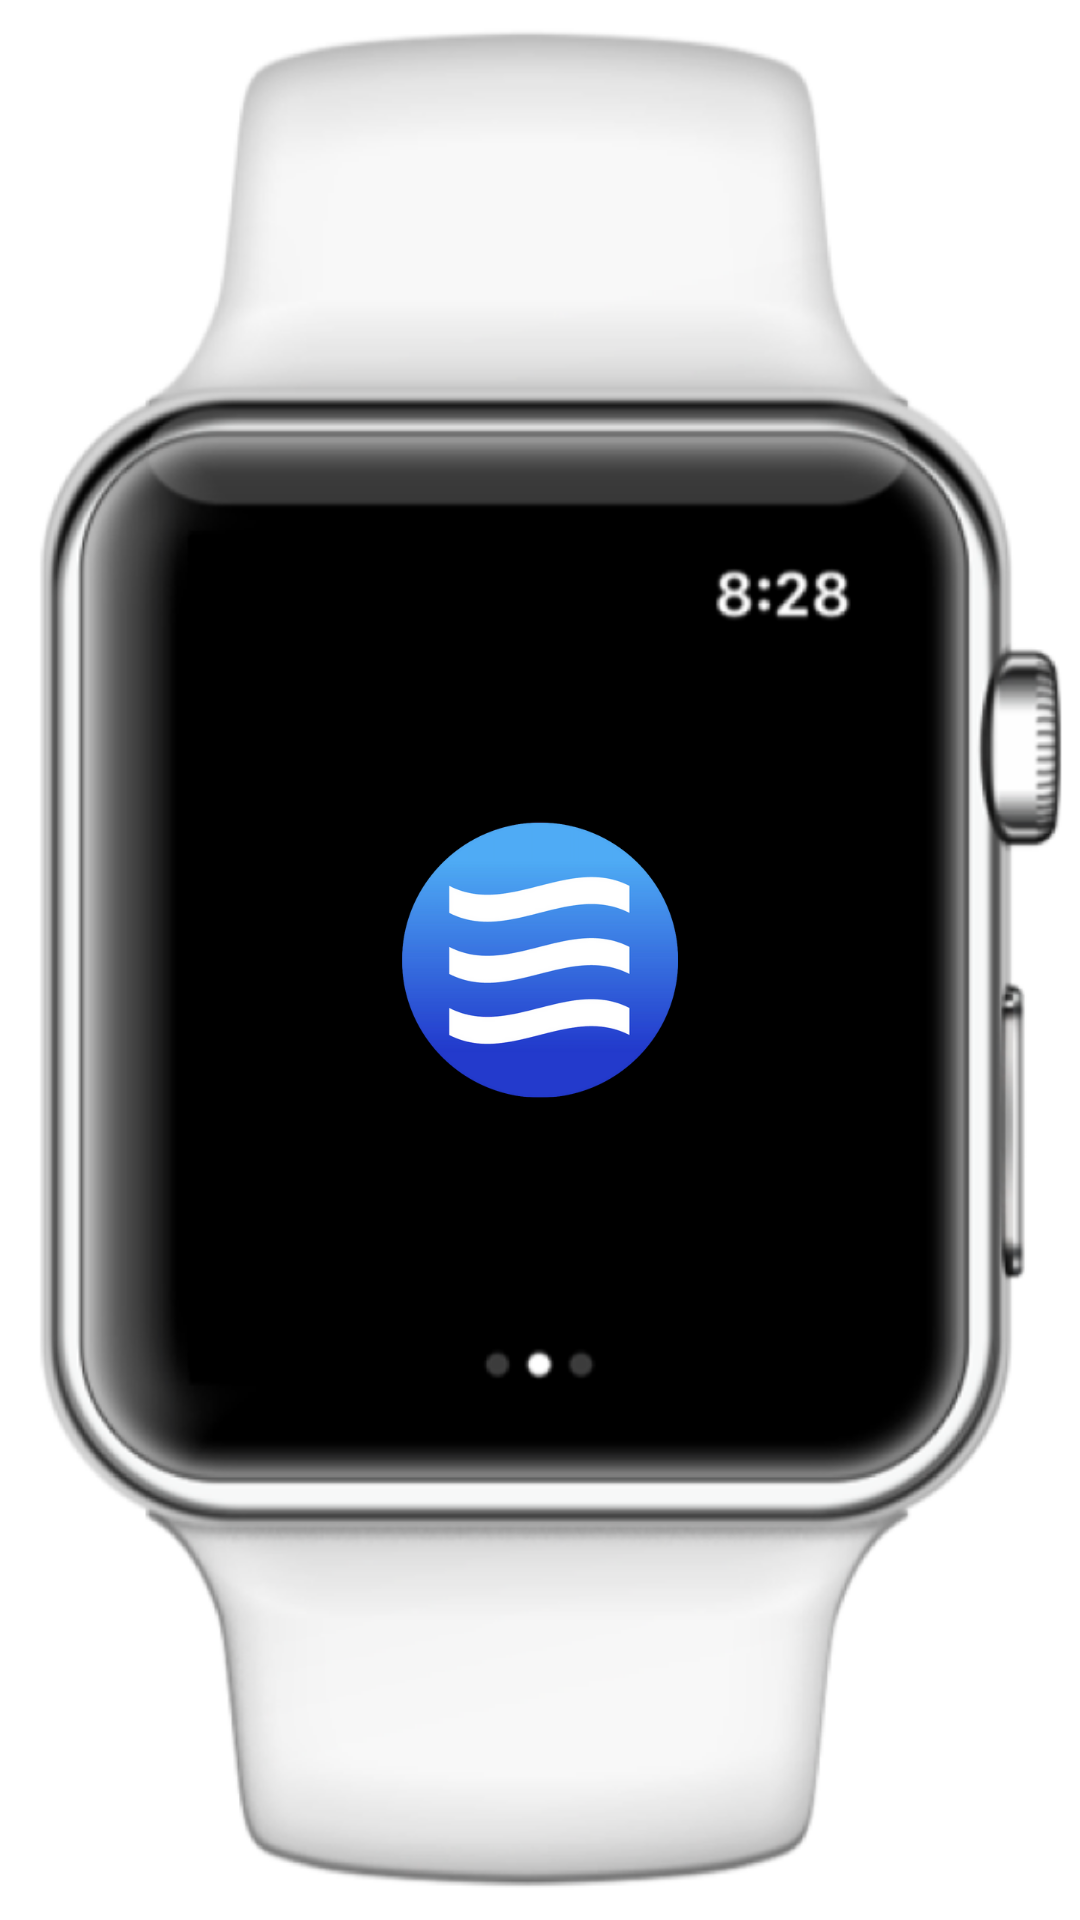 Sense Relief App on Apple Watch